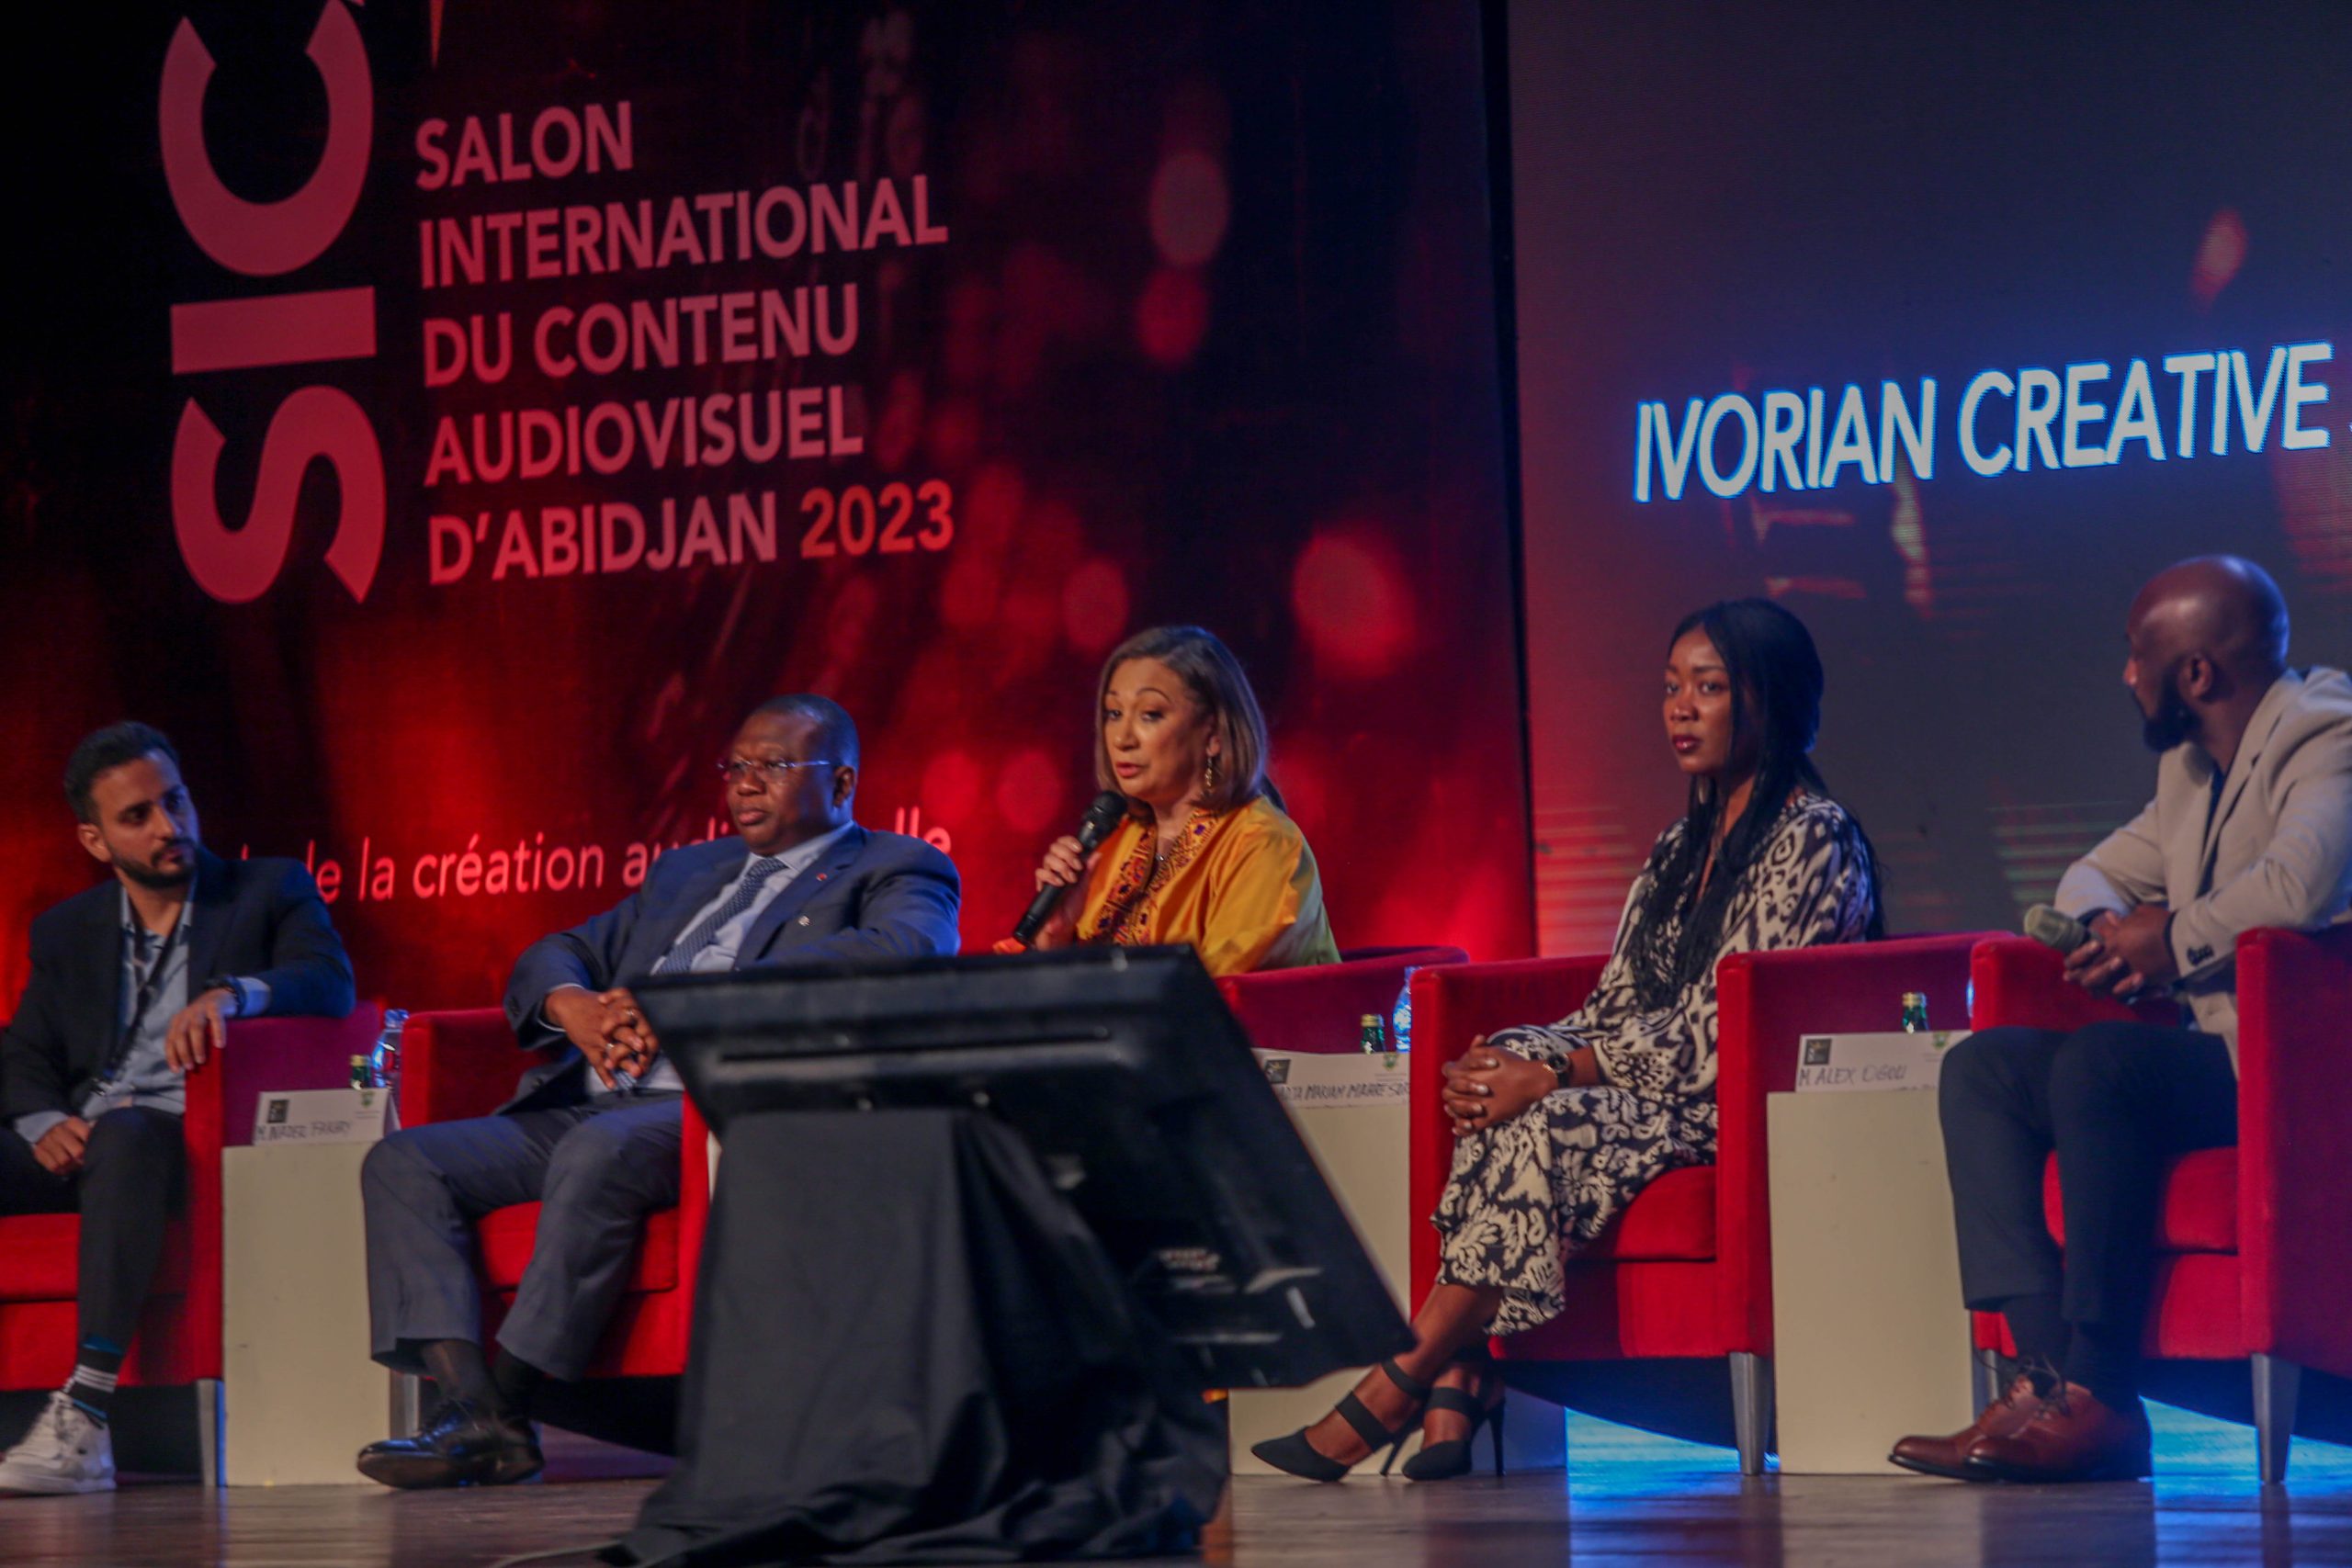 Salon International du Contenu Audiovisuel d’Abidjan (SICA)